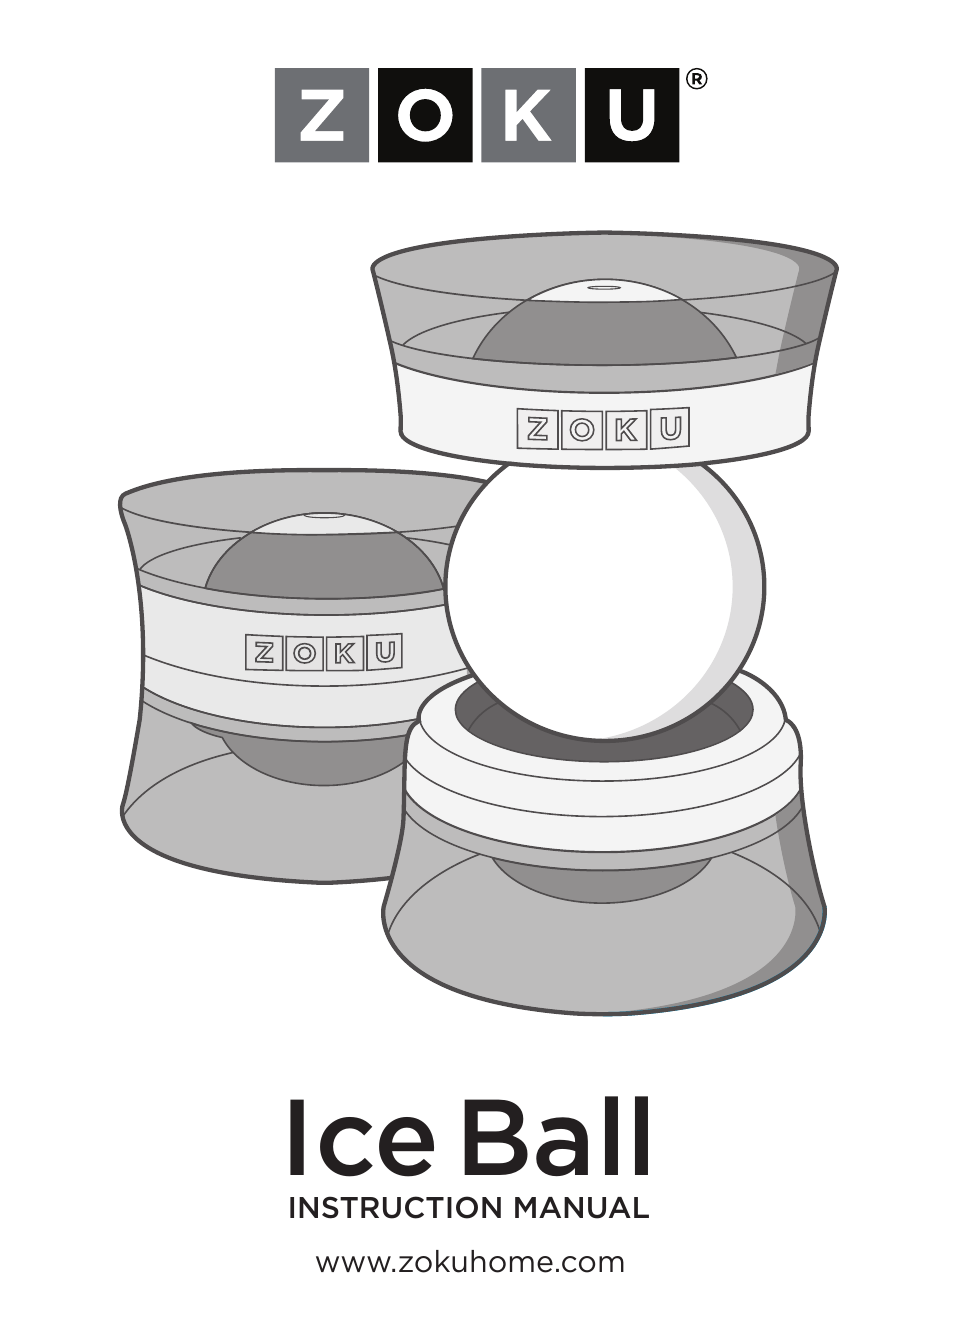 ICE BALL MOLDS